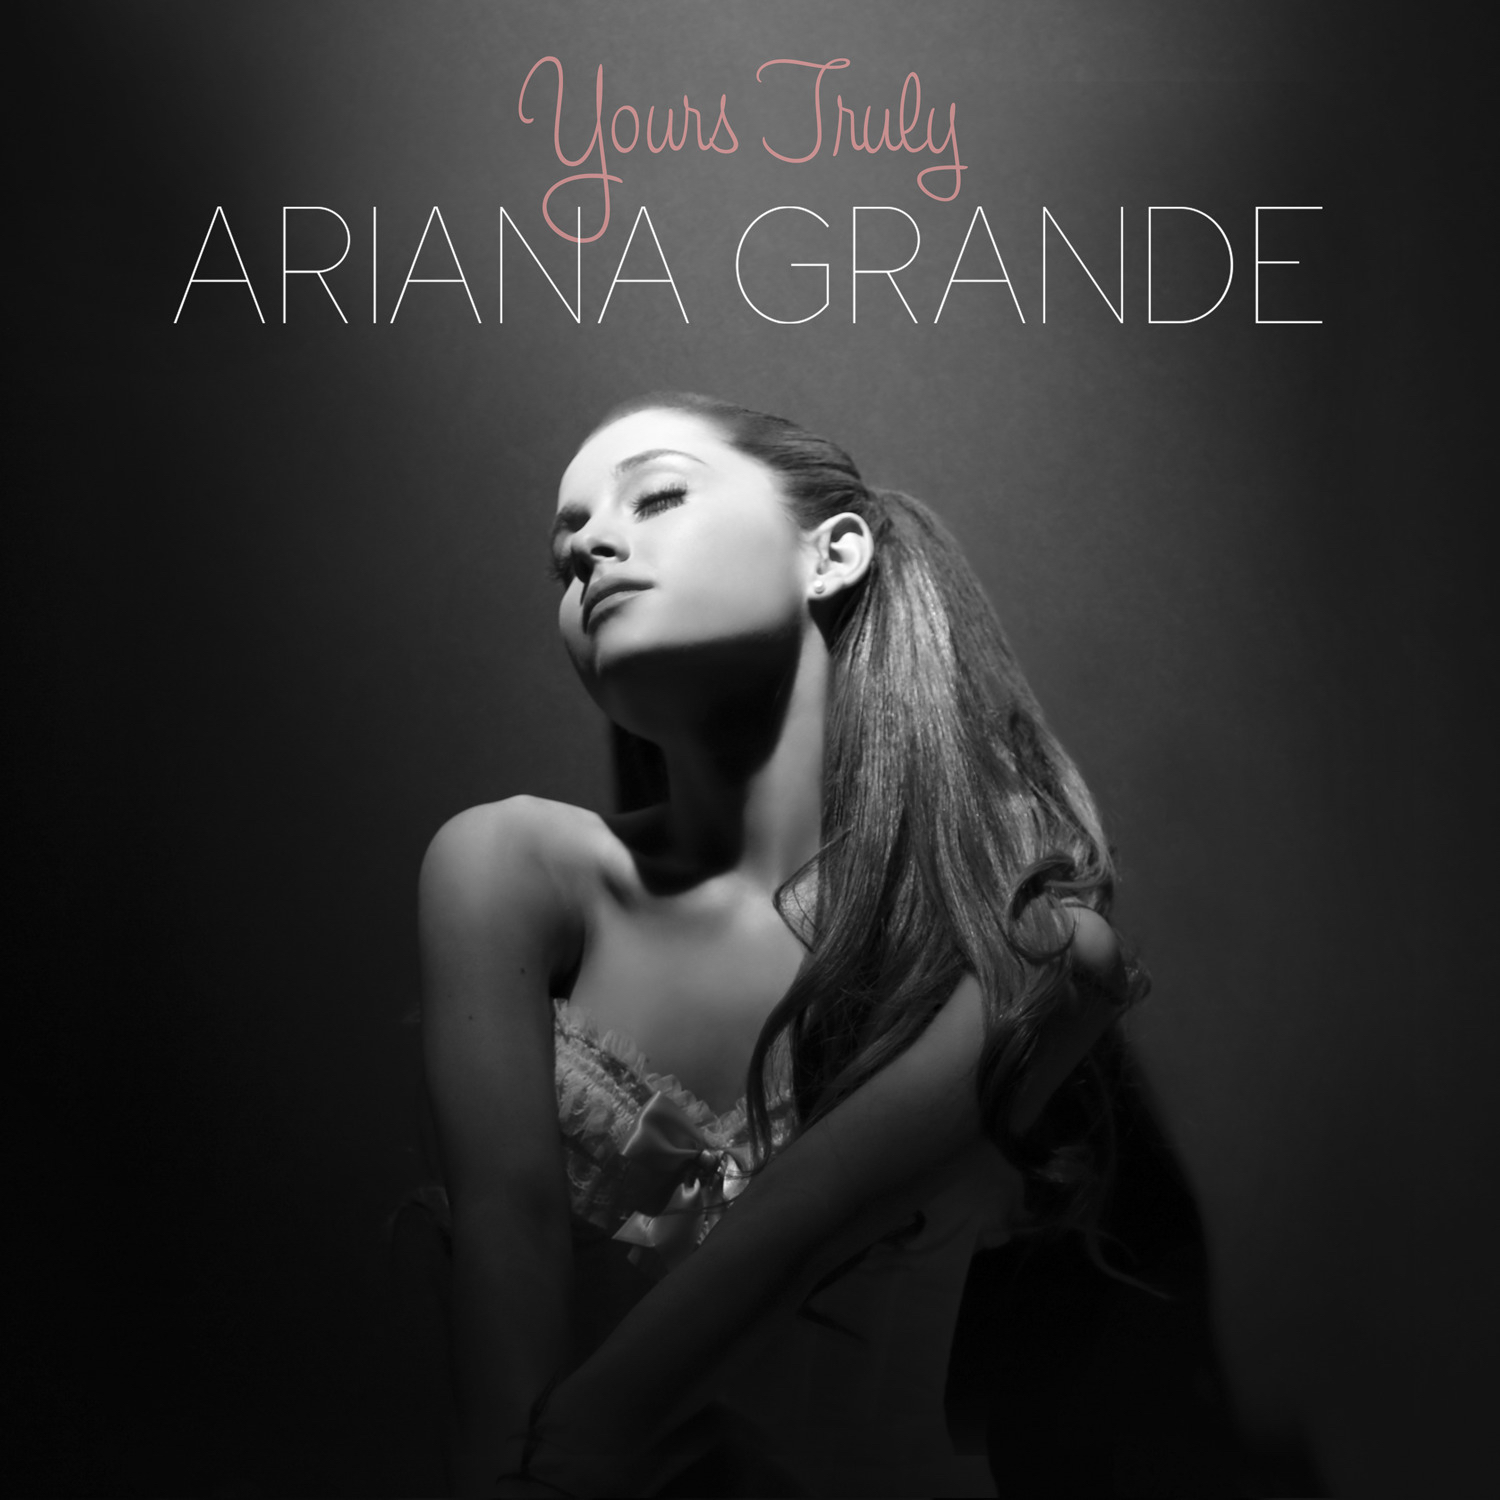 Ariana Grande — Honeymoon Avenue cover artwork